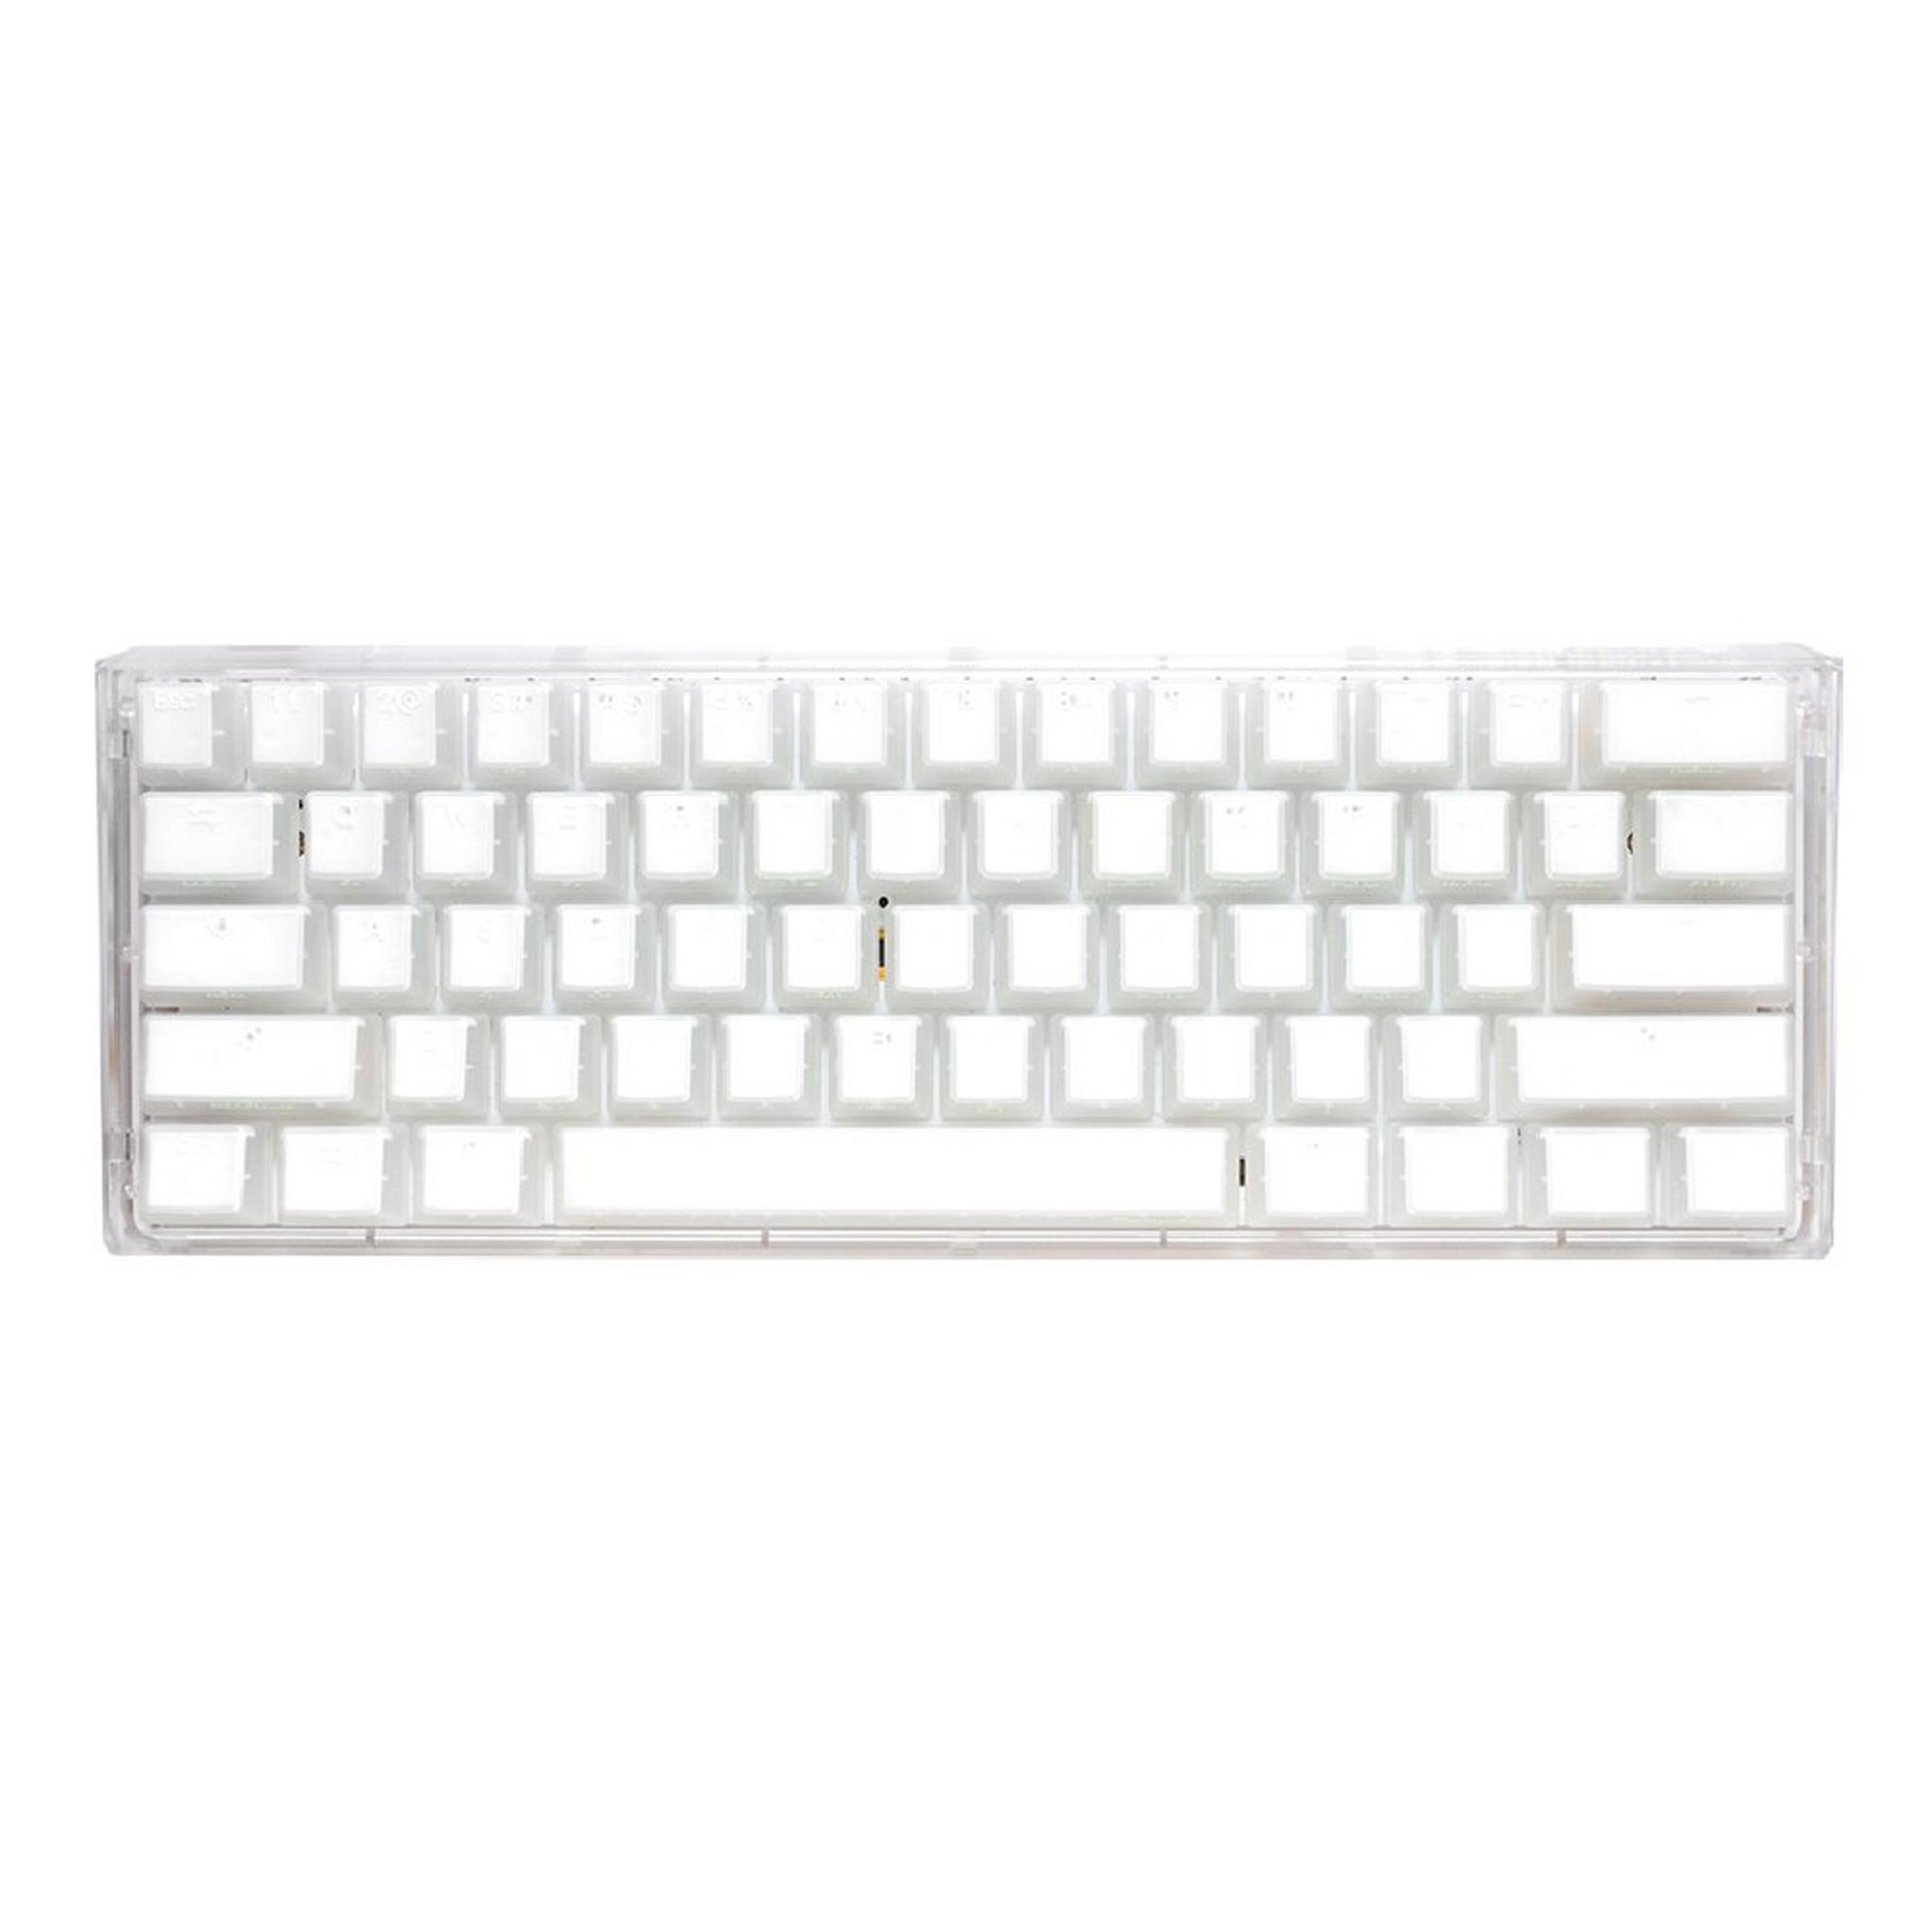 Ducky One 3 Mini Hot-Swap Mechanical Gaming Keyboard, Silent Red RGB Switch, DKON2161ST-SUSPDAWWWWC1– Aura White